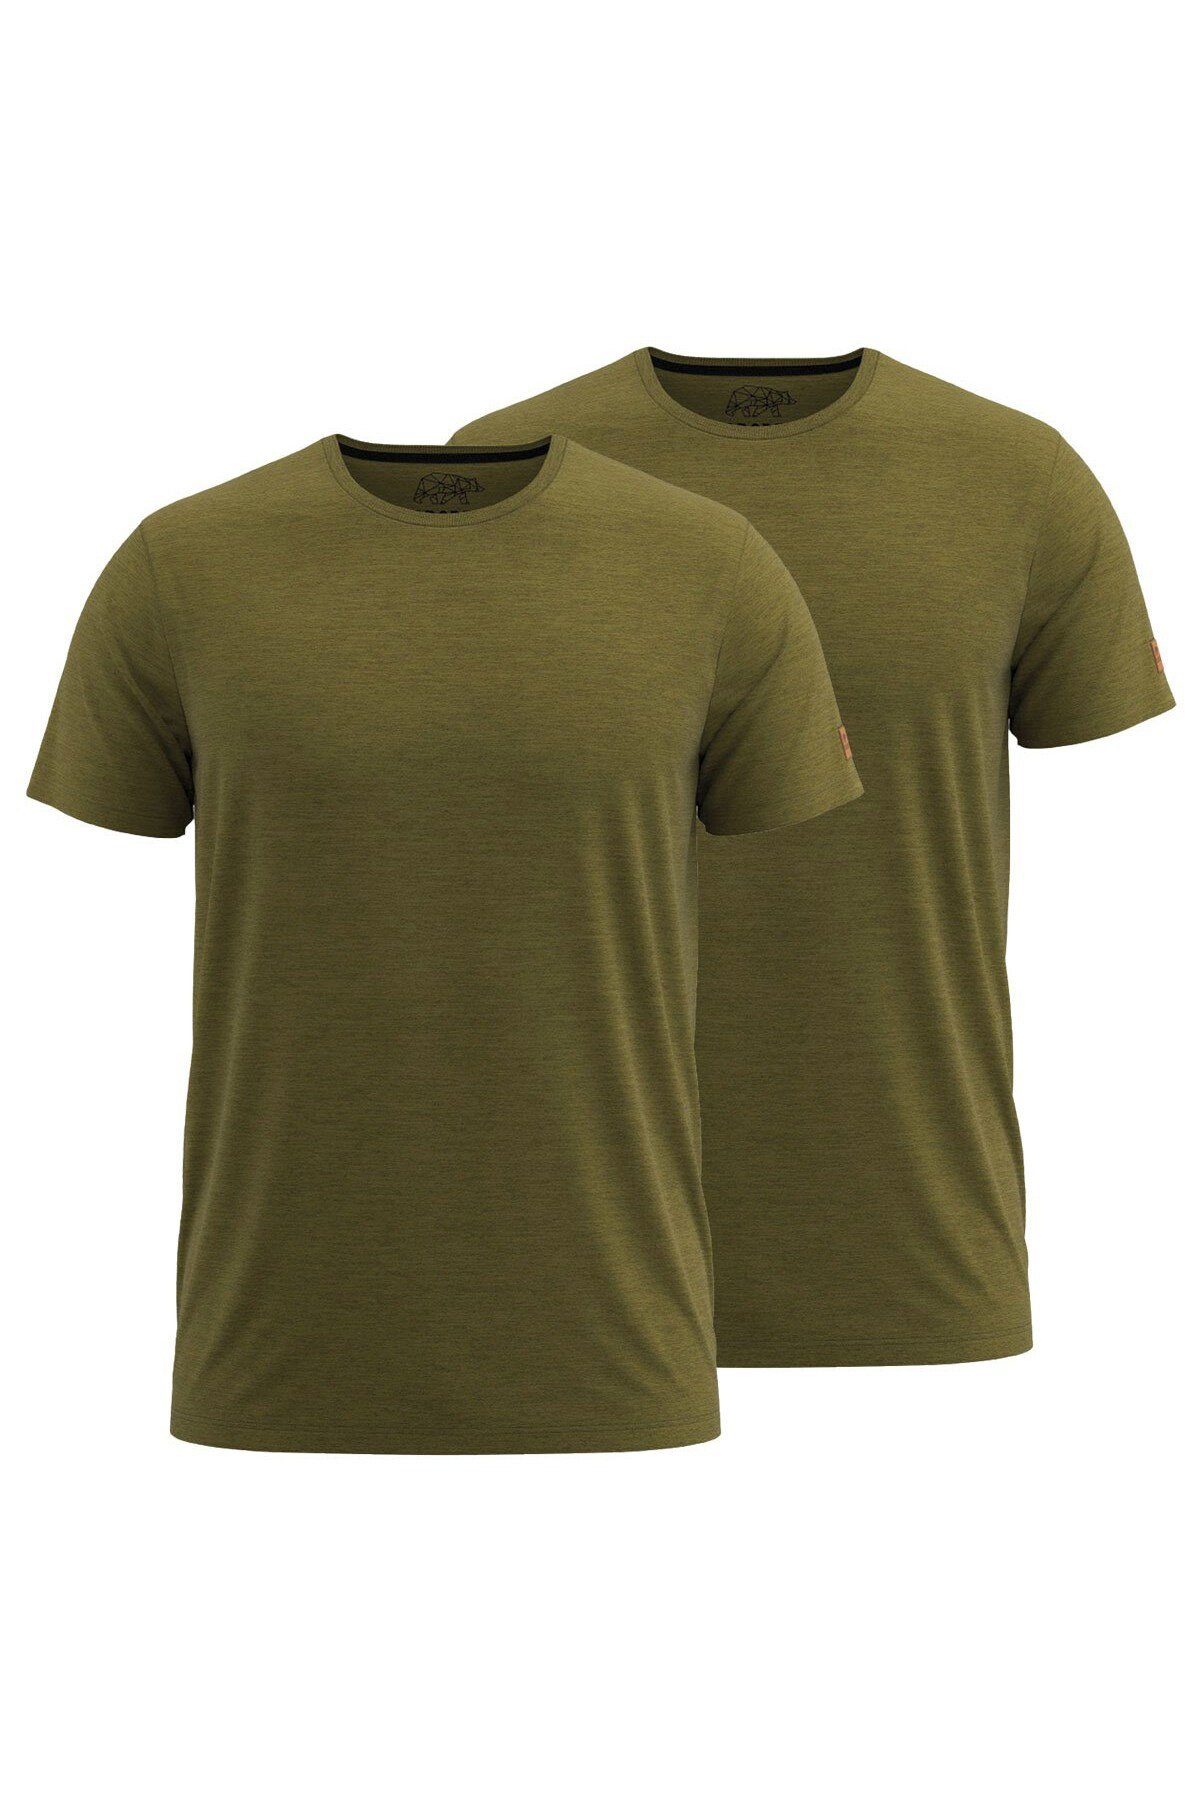 FORSBERG T-Shirt T-Shirt 1/2 Doppelpack khaki